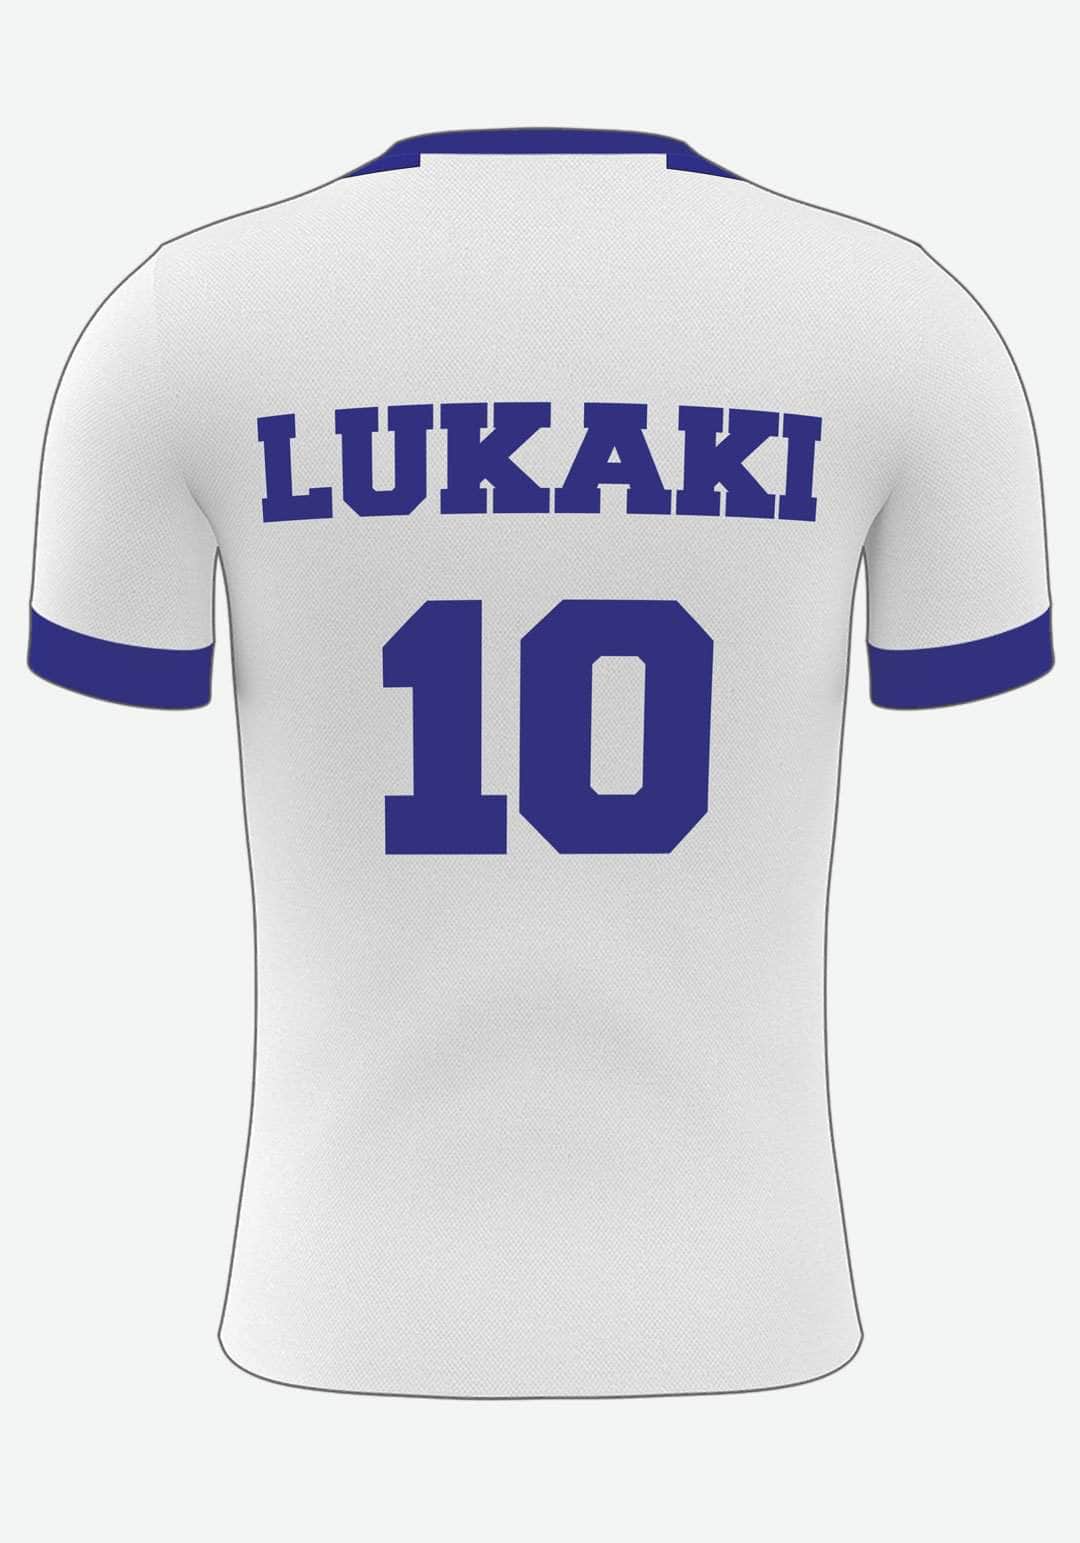 Se Hvid / blå Fodboldplakat - med eget navn og nummer, 50x70 hos Lukaki.dk